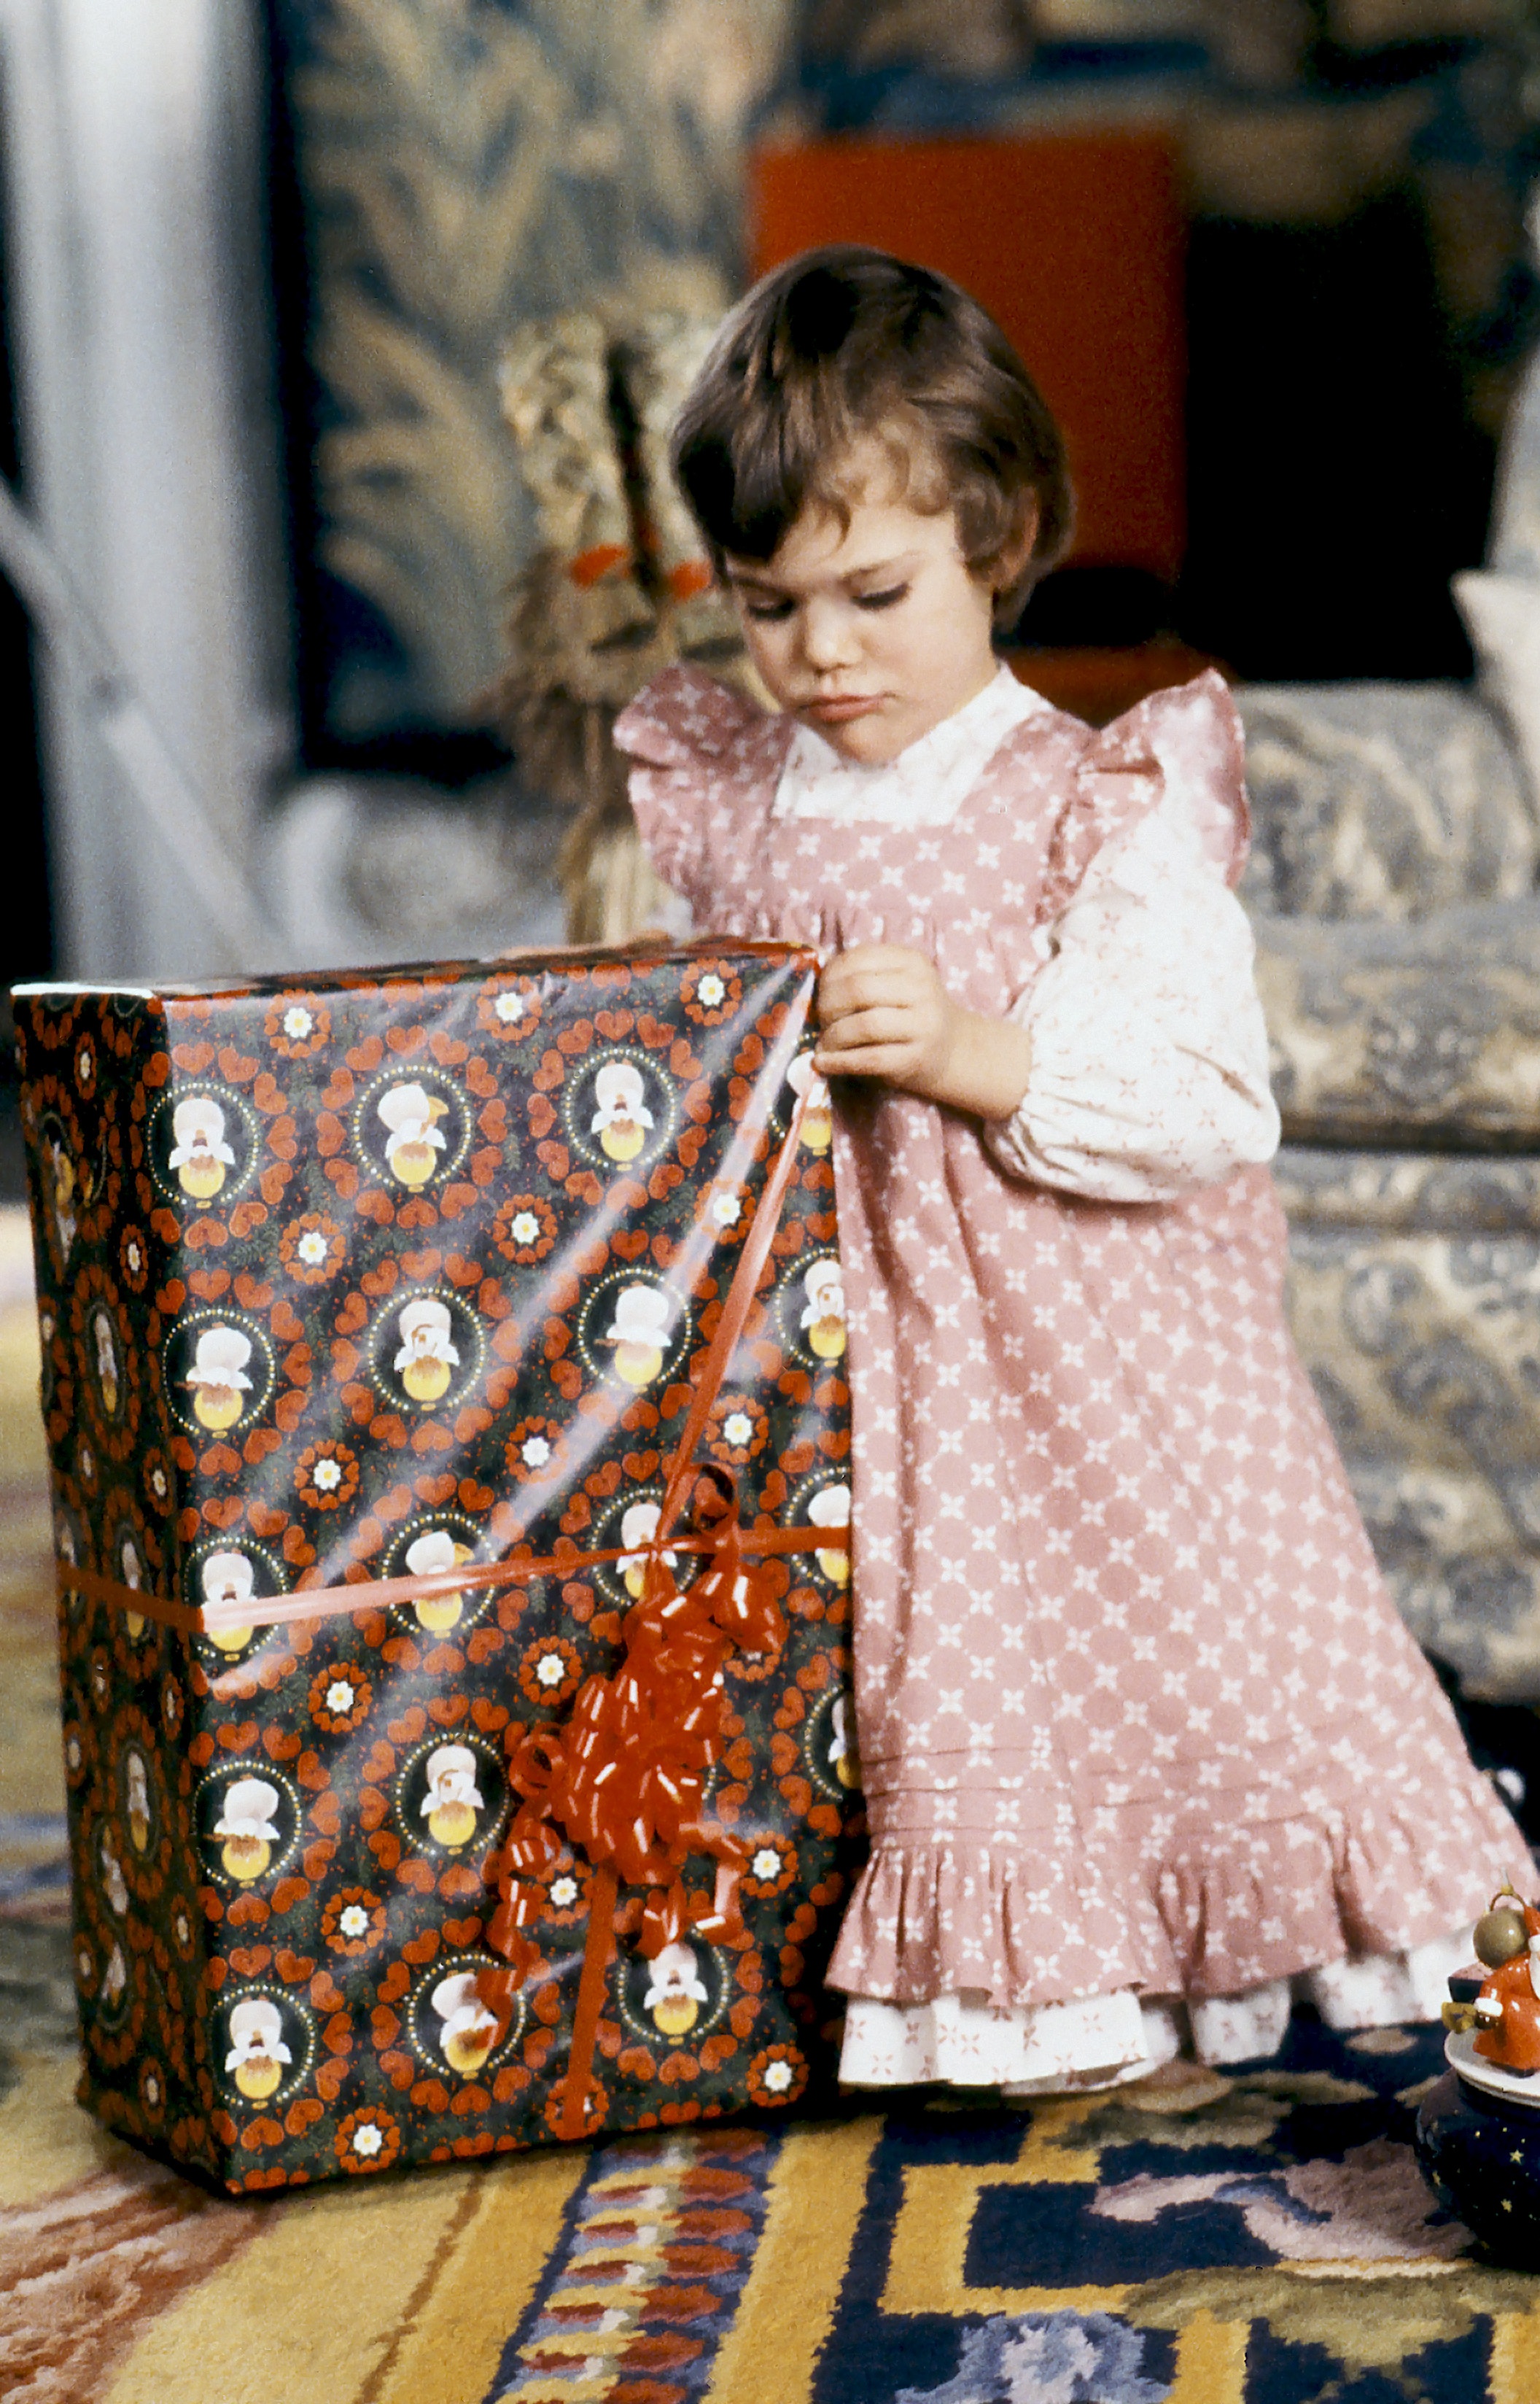 1981. Kronprinsessan Victoria öppnar julklappar.